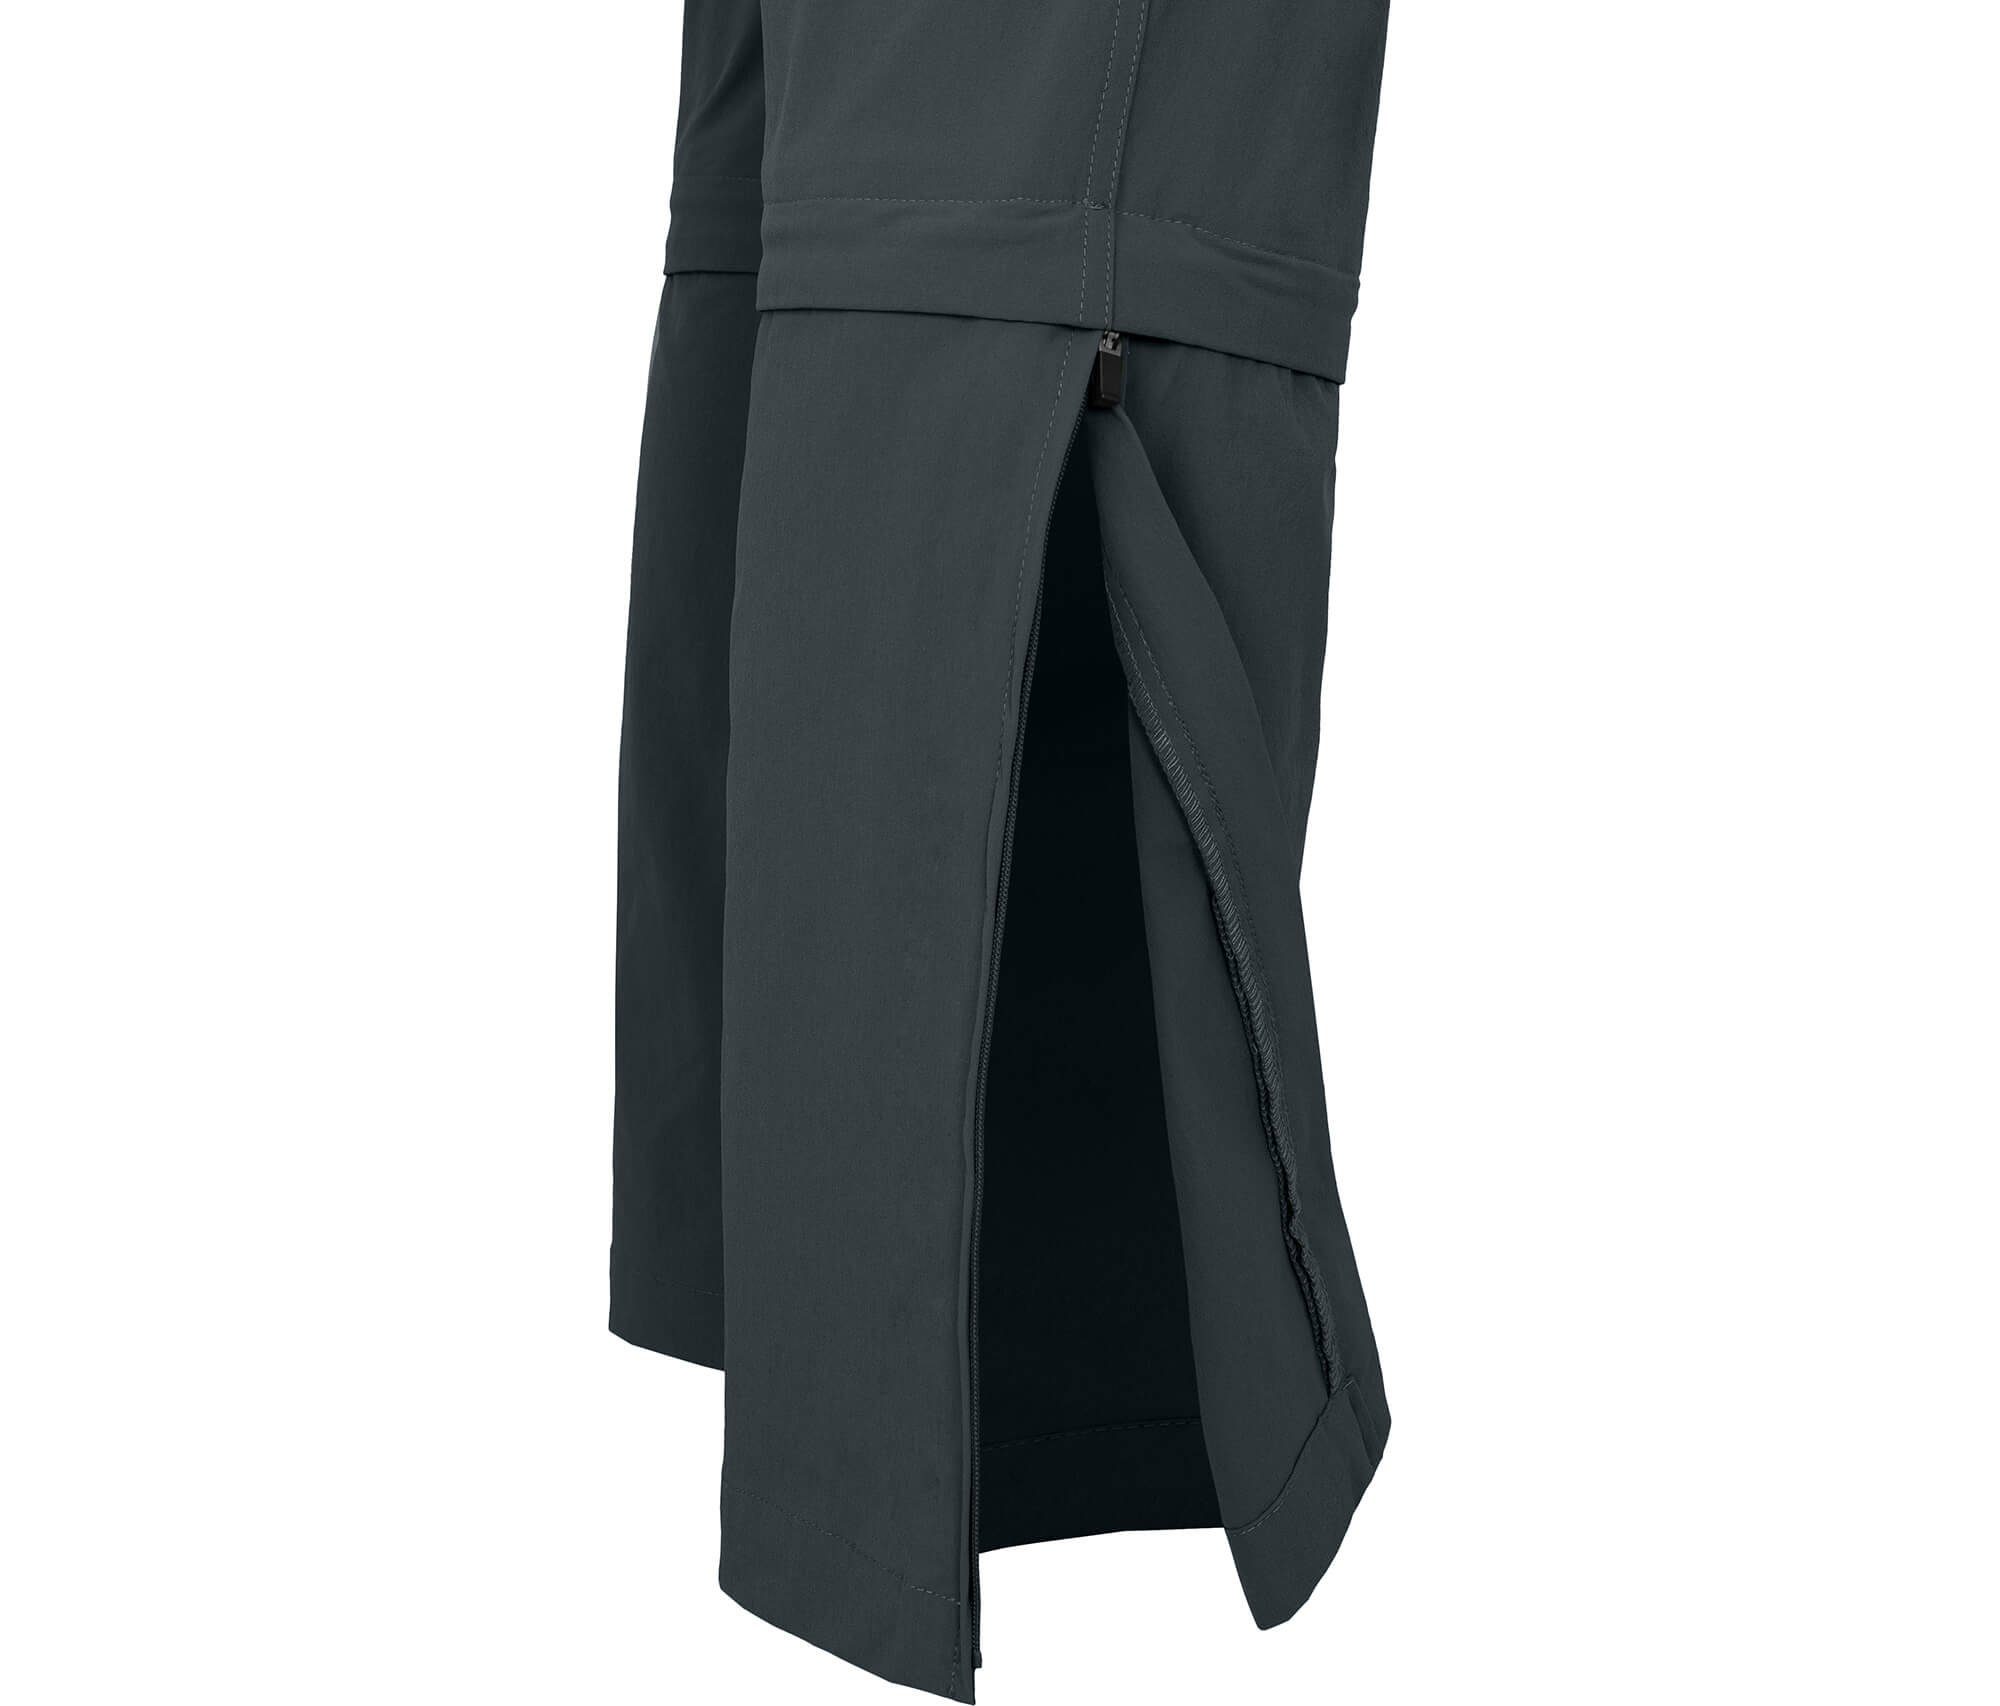 Bergson QUEENSLAND pflegeleicht, Normalgrößen, Doppel dunkel grau mit Zipp-Off Herren Zip-off-Hose Wanderhose, vielseitig, T-ZIPP